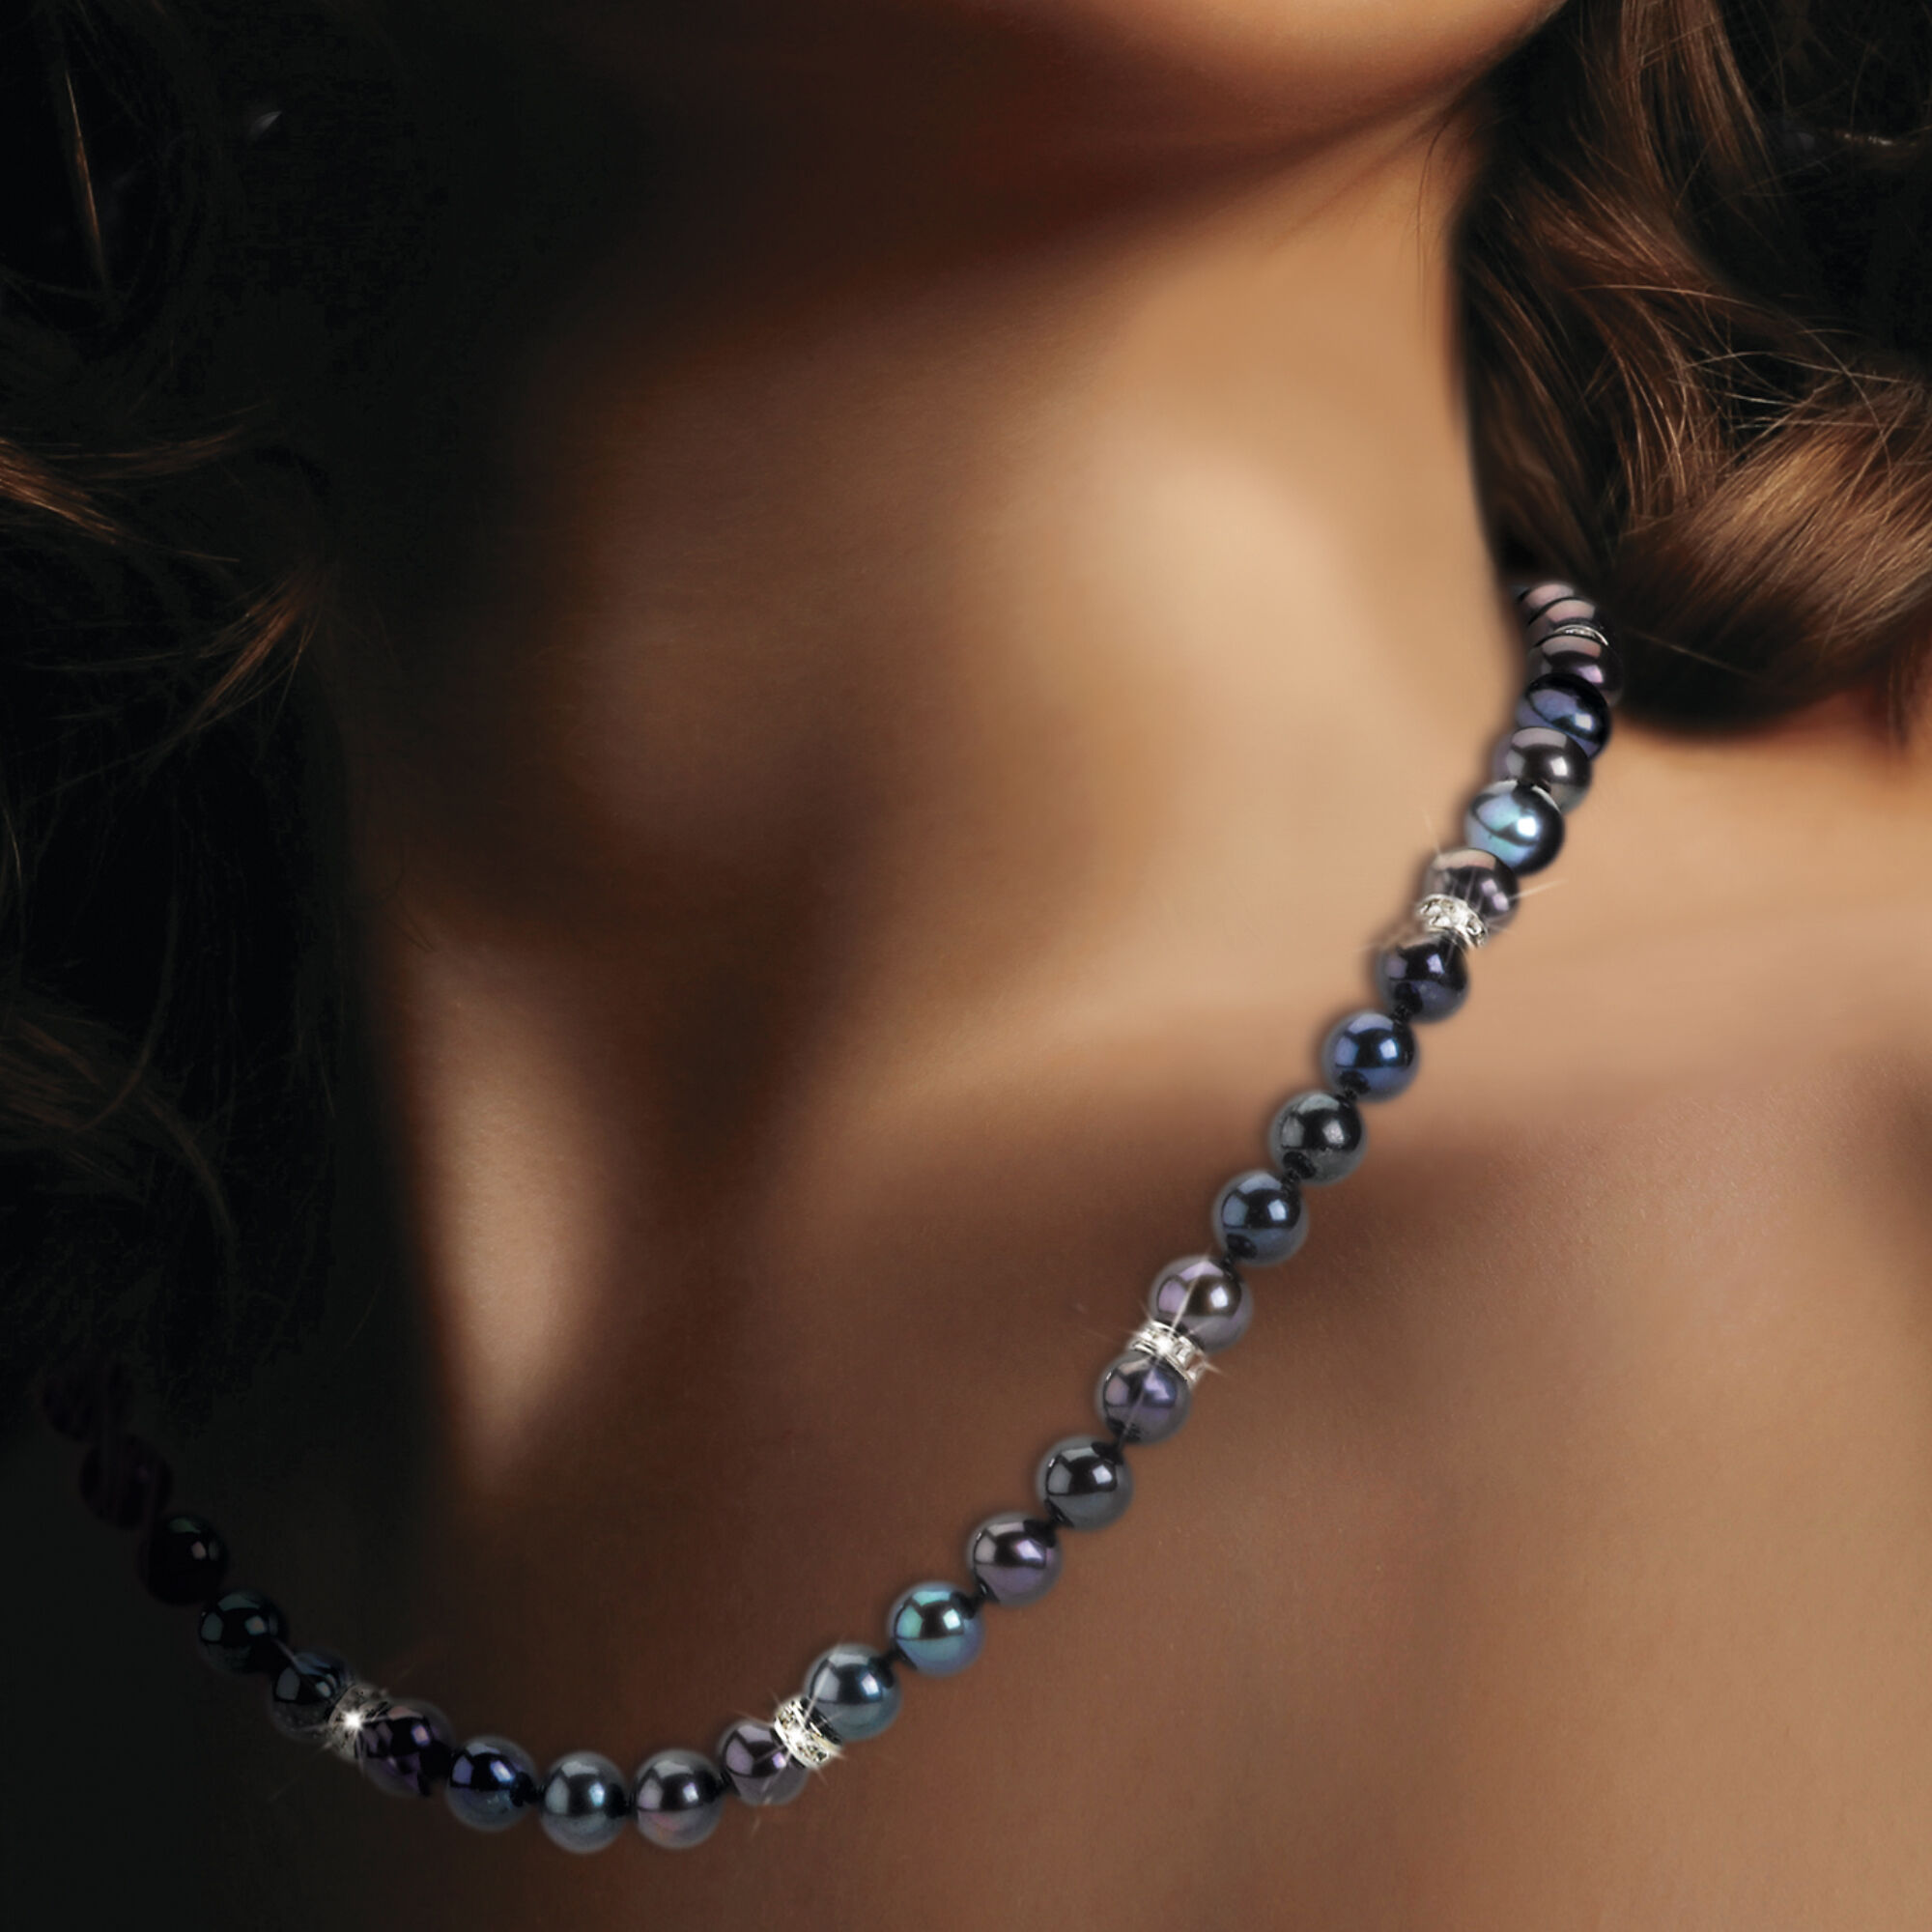 Midnight Spell Black Pearl Necklace 1333 0337 m model